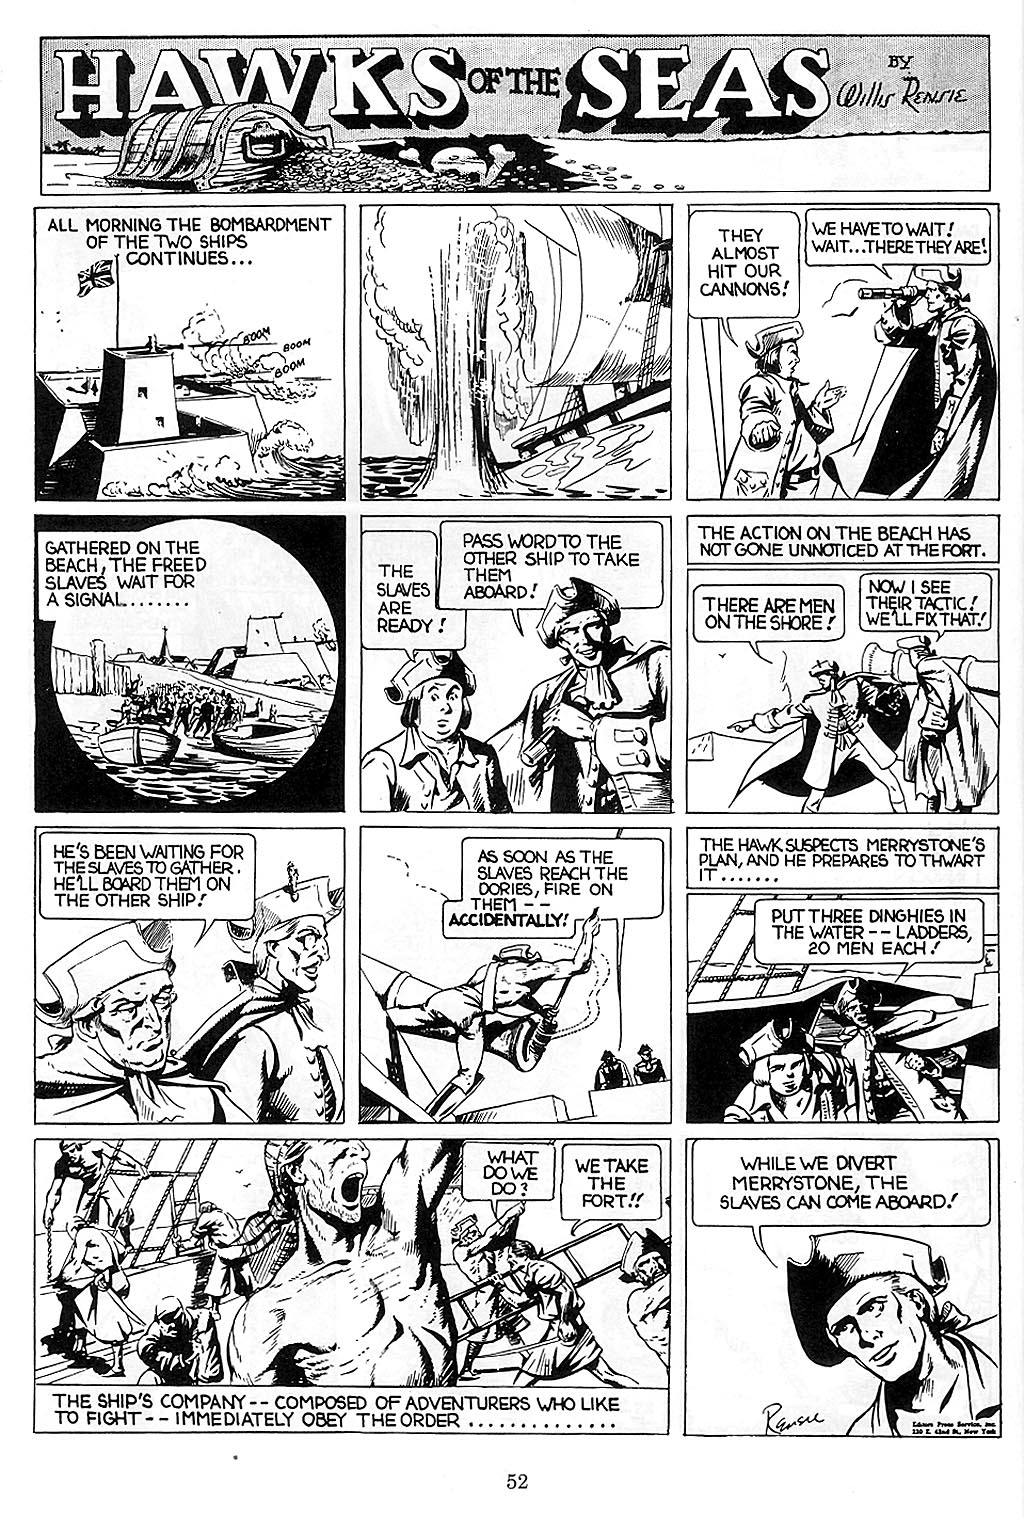 Read online Will Eisner's Hawks of the Seas comic -  Issue # TPB - 53